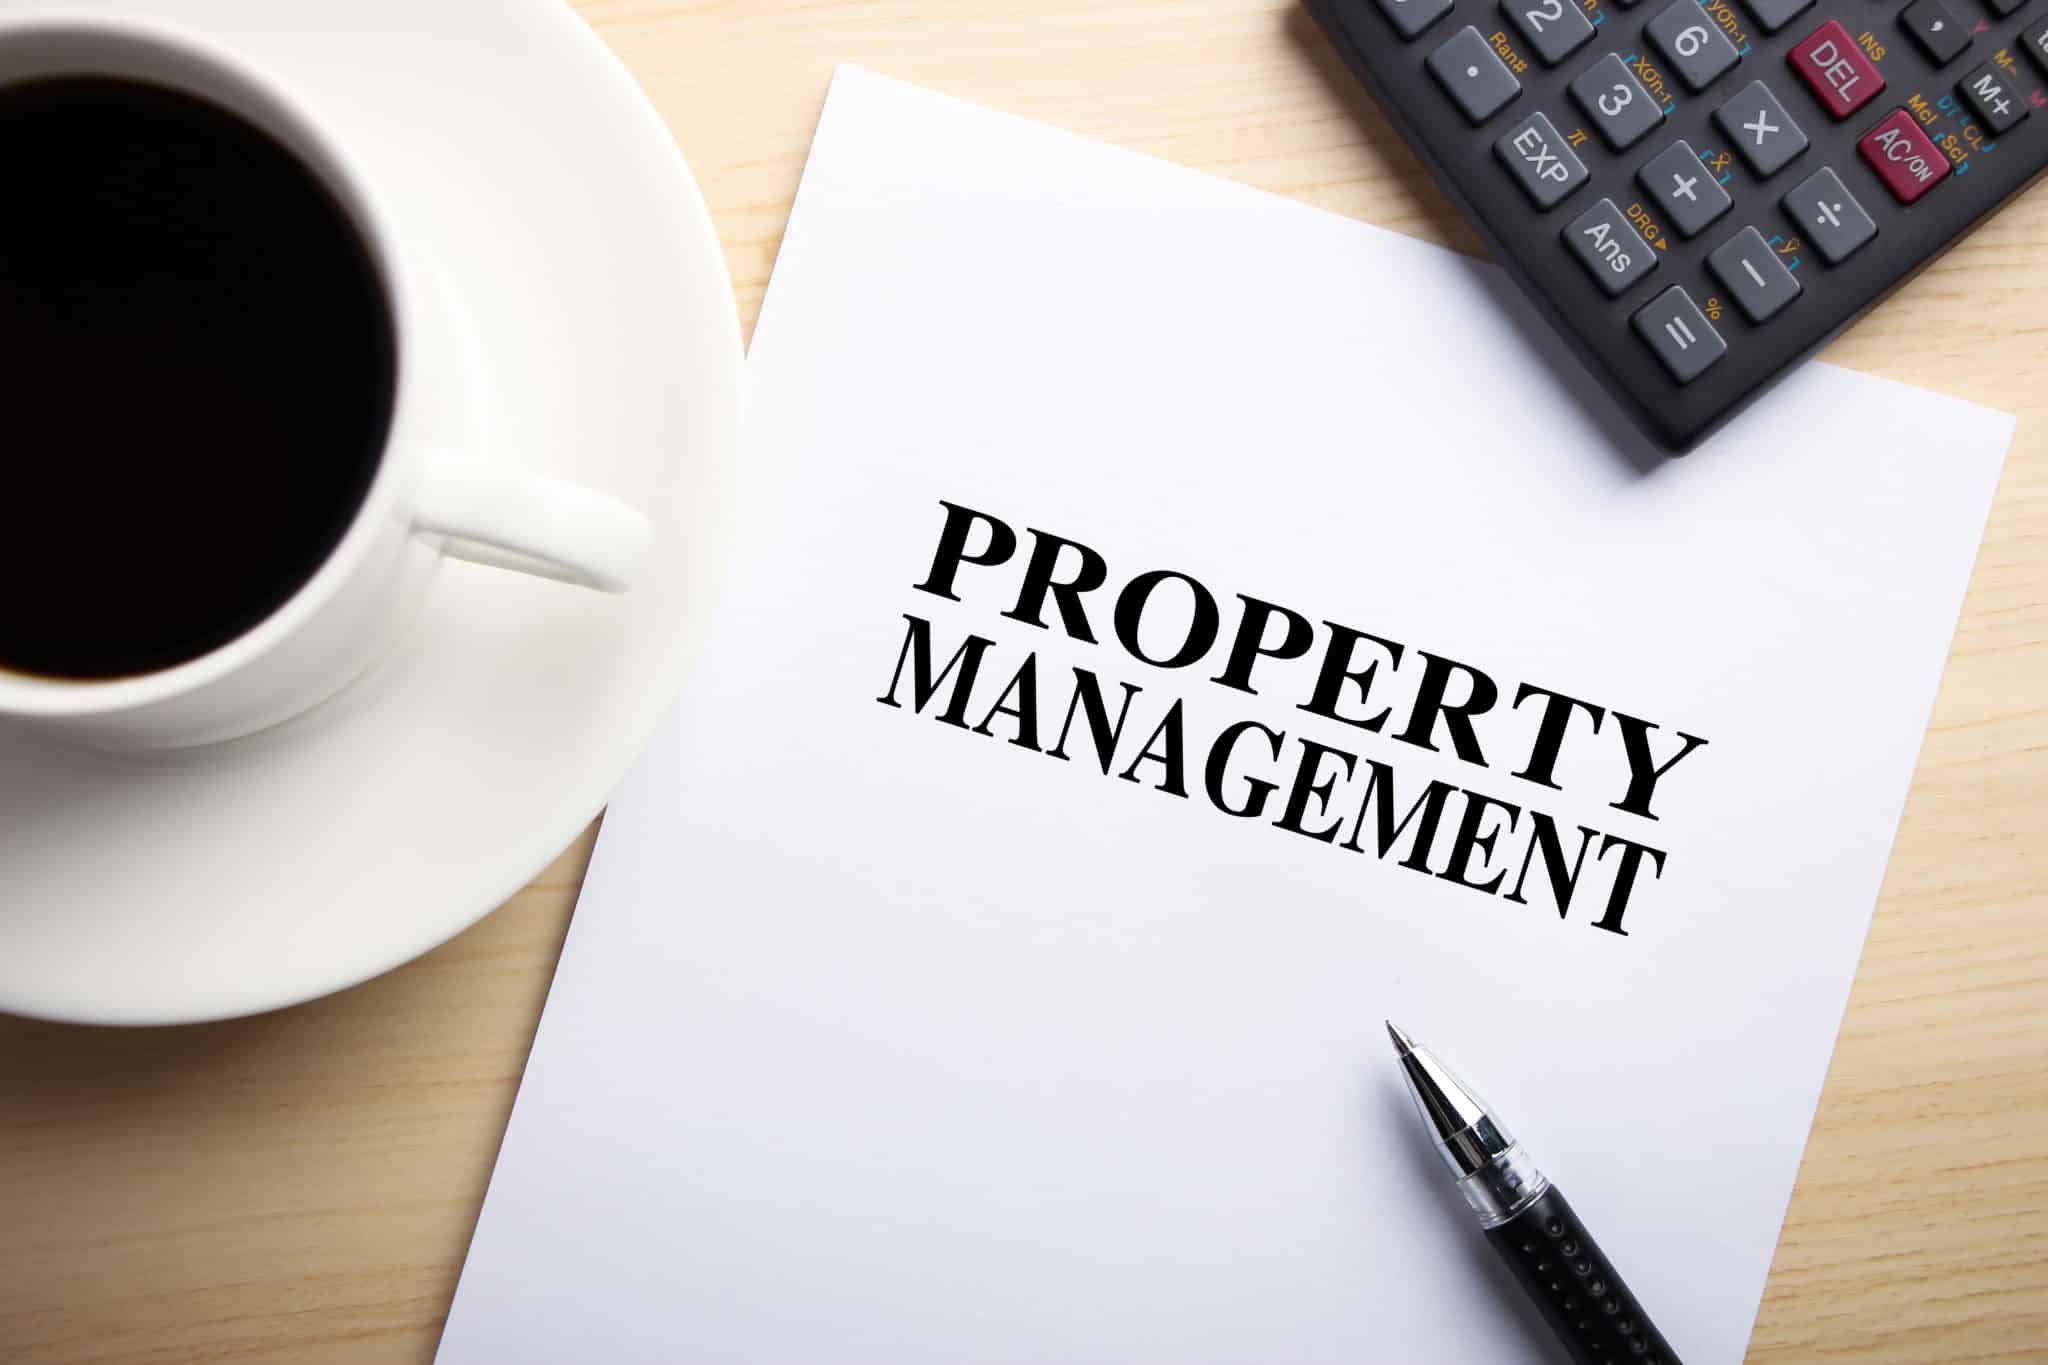 Santa Rosa Property Management